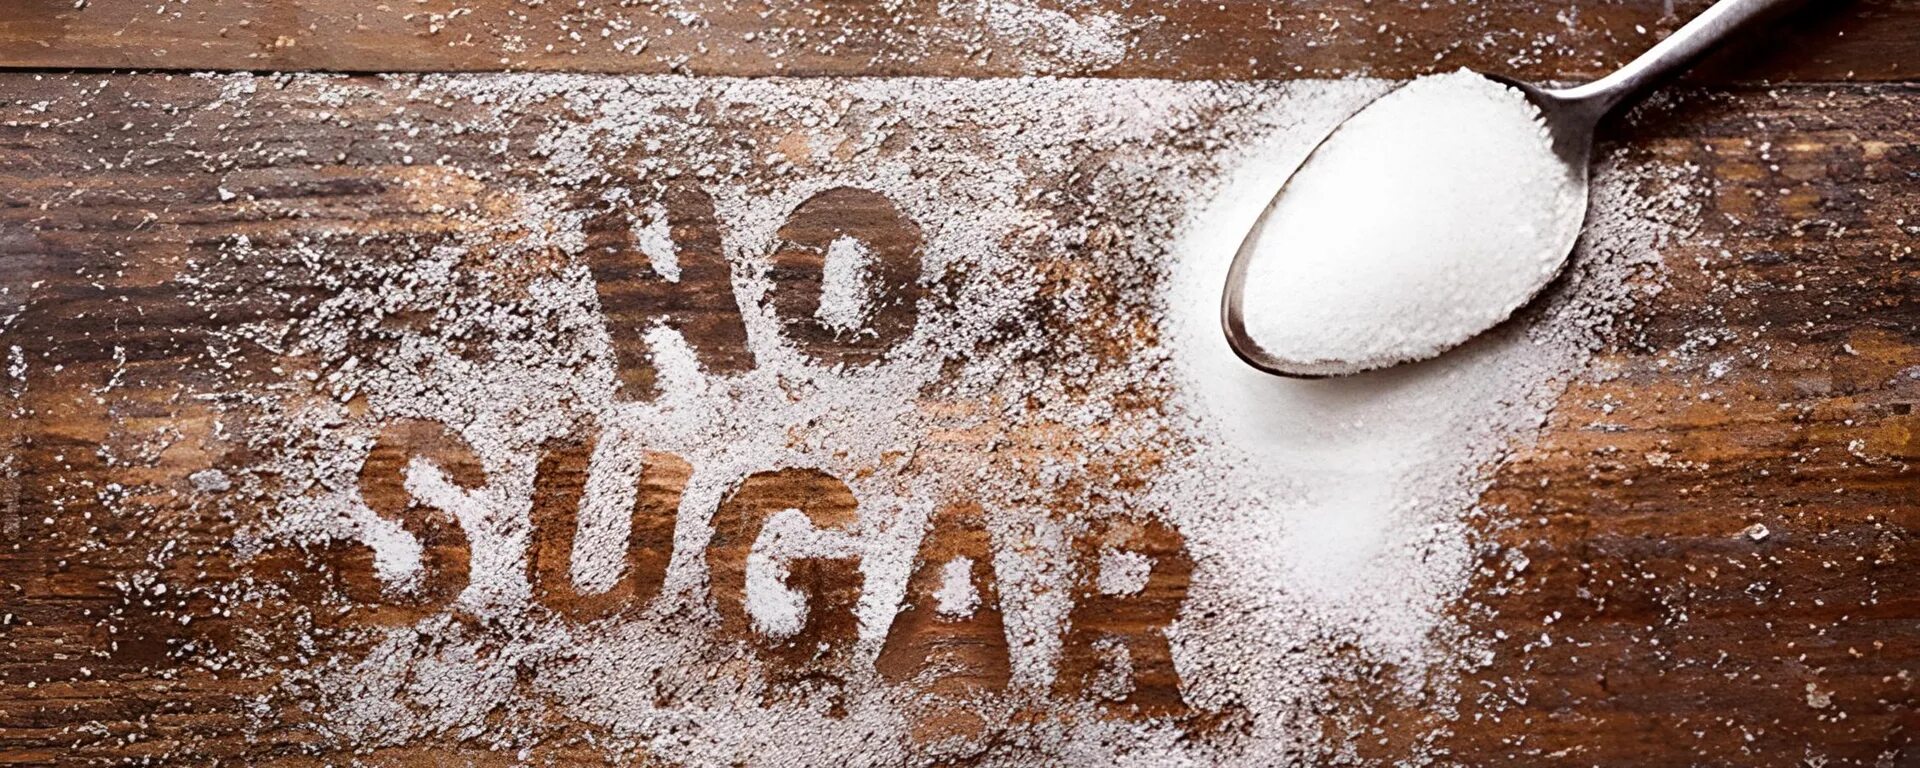 6 месяцев без сахара. Обои no Sugar. No Sugar Challenge. Сахар фон. Без сахара.